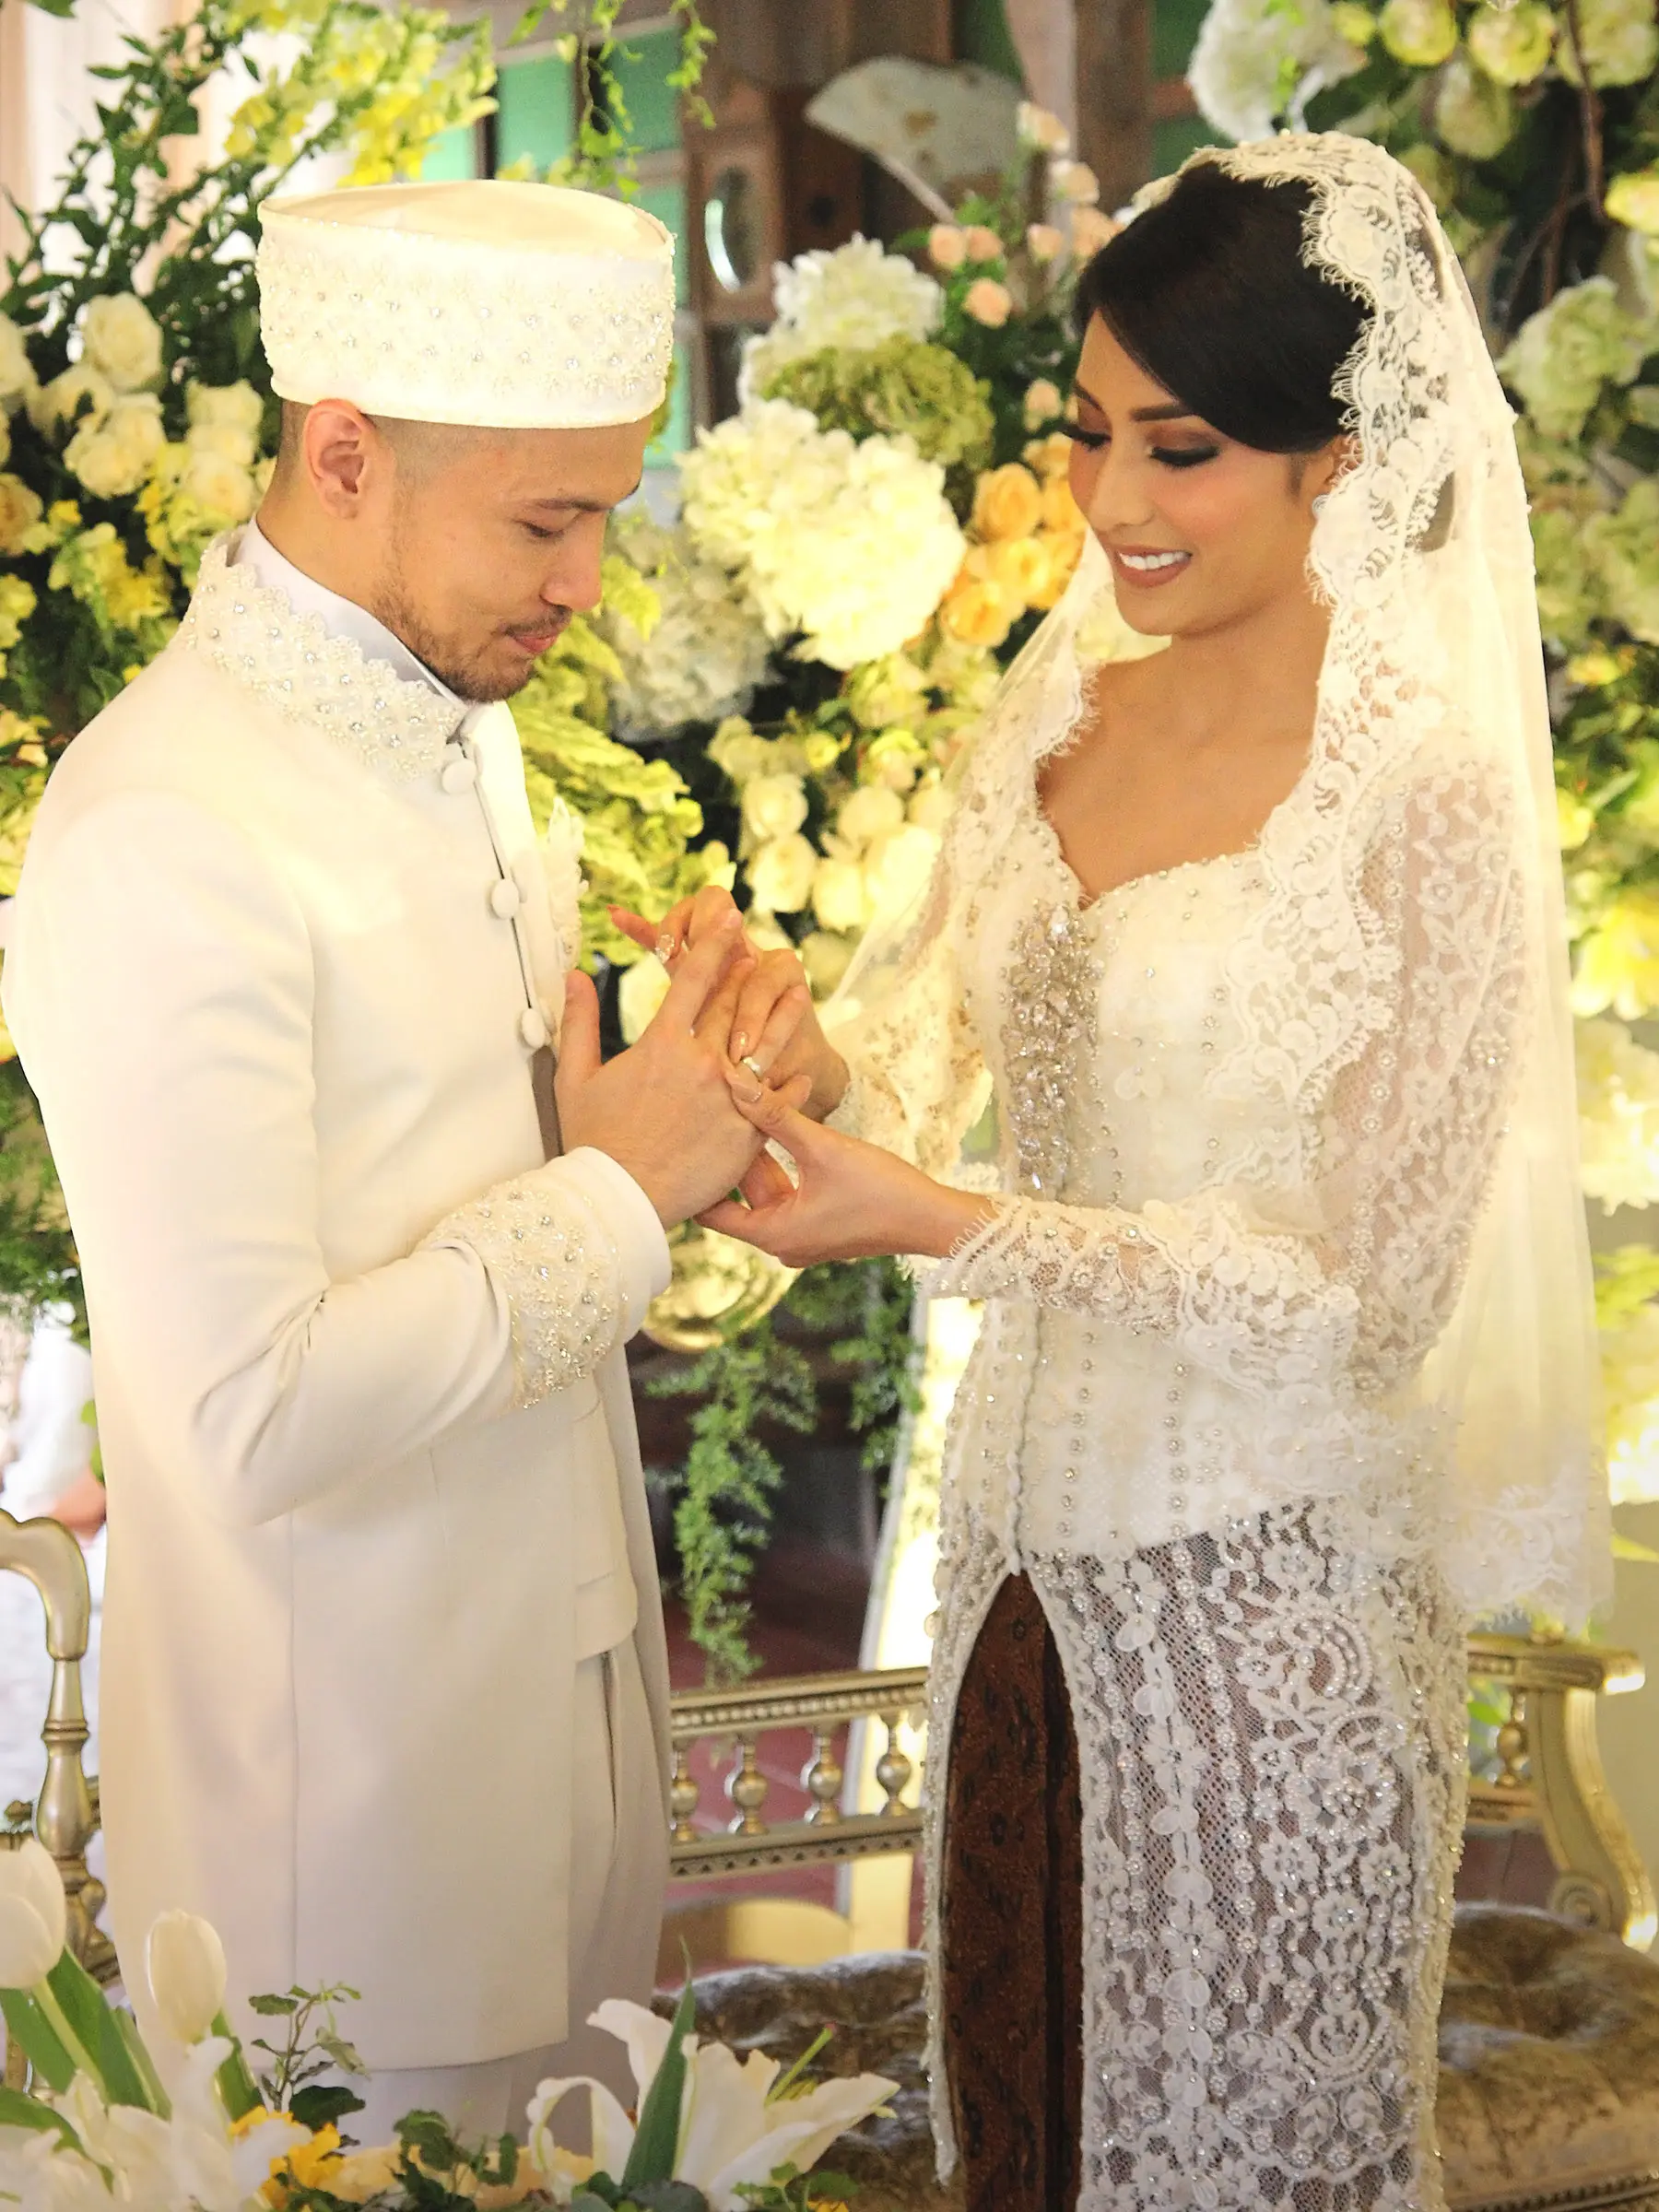 Tyas Mirasih resmi menjadi istri dari musisi Raiden Soedjono pada Sabtu (7/7/2017) siang. Setelah selesai akad nikah, pasangan ini akan menggelar resepsi pernikahan di tempat yang sama pada malam harinya. (Bambang E. Ros/Bintang.com)